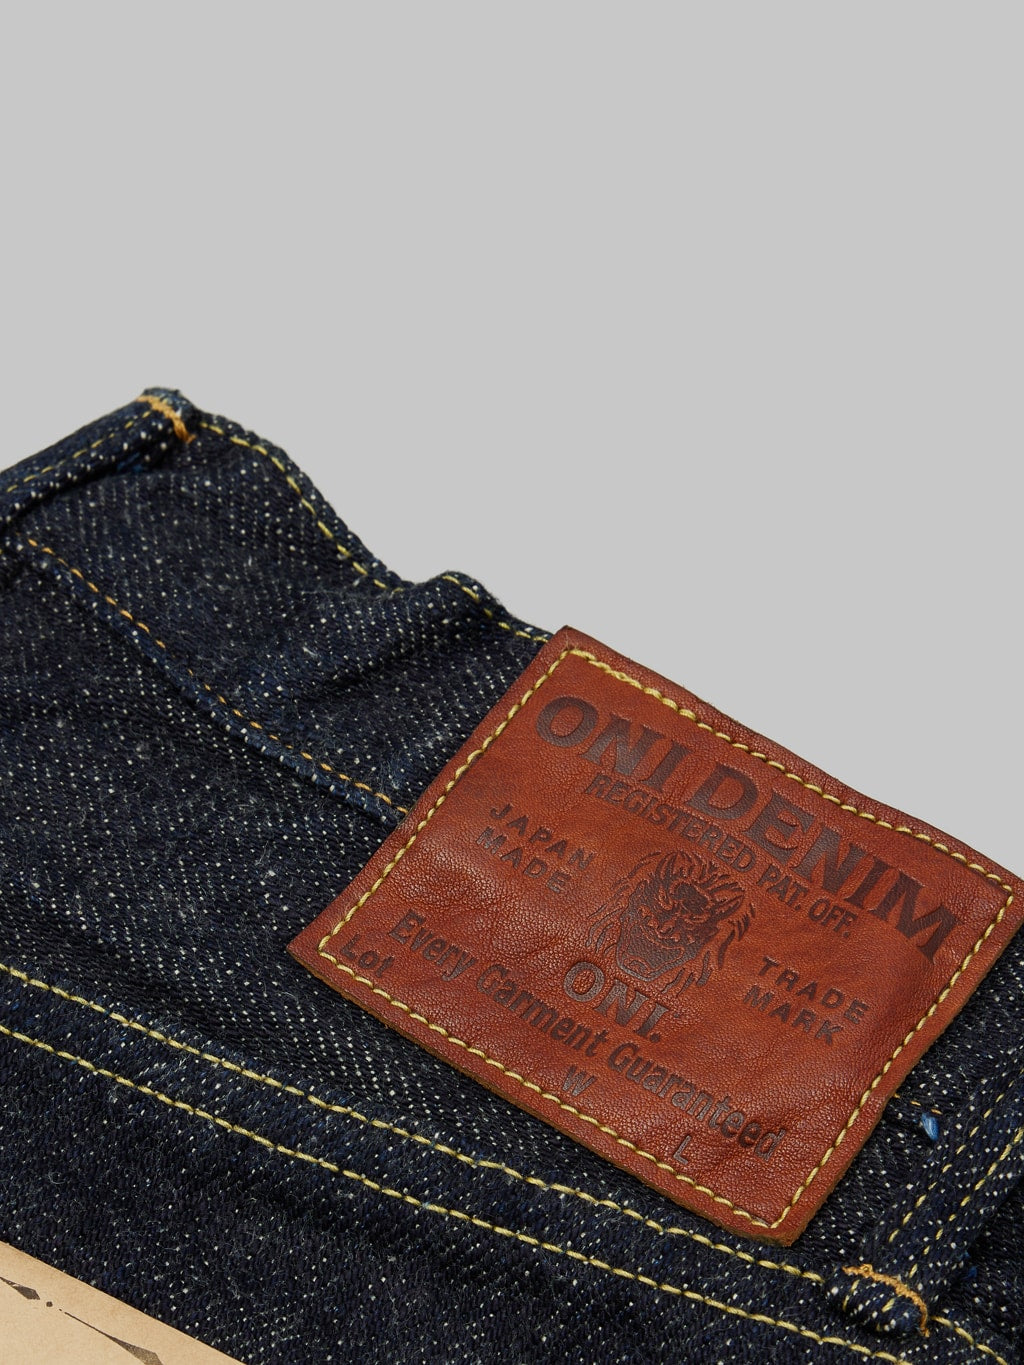 ONI Denim 246DIZR Dark Indigo Secret Denim Jeans  leather patch